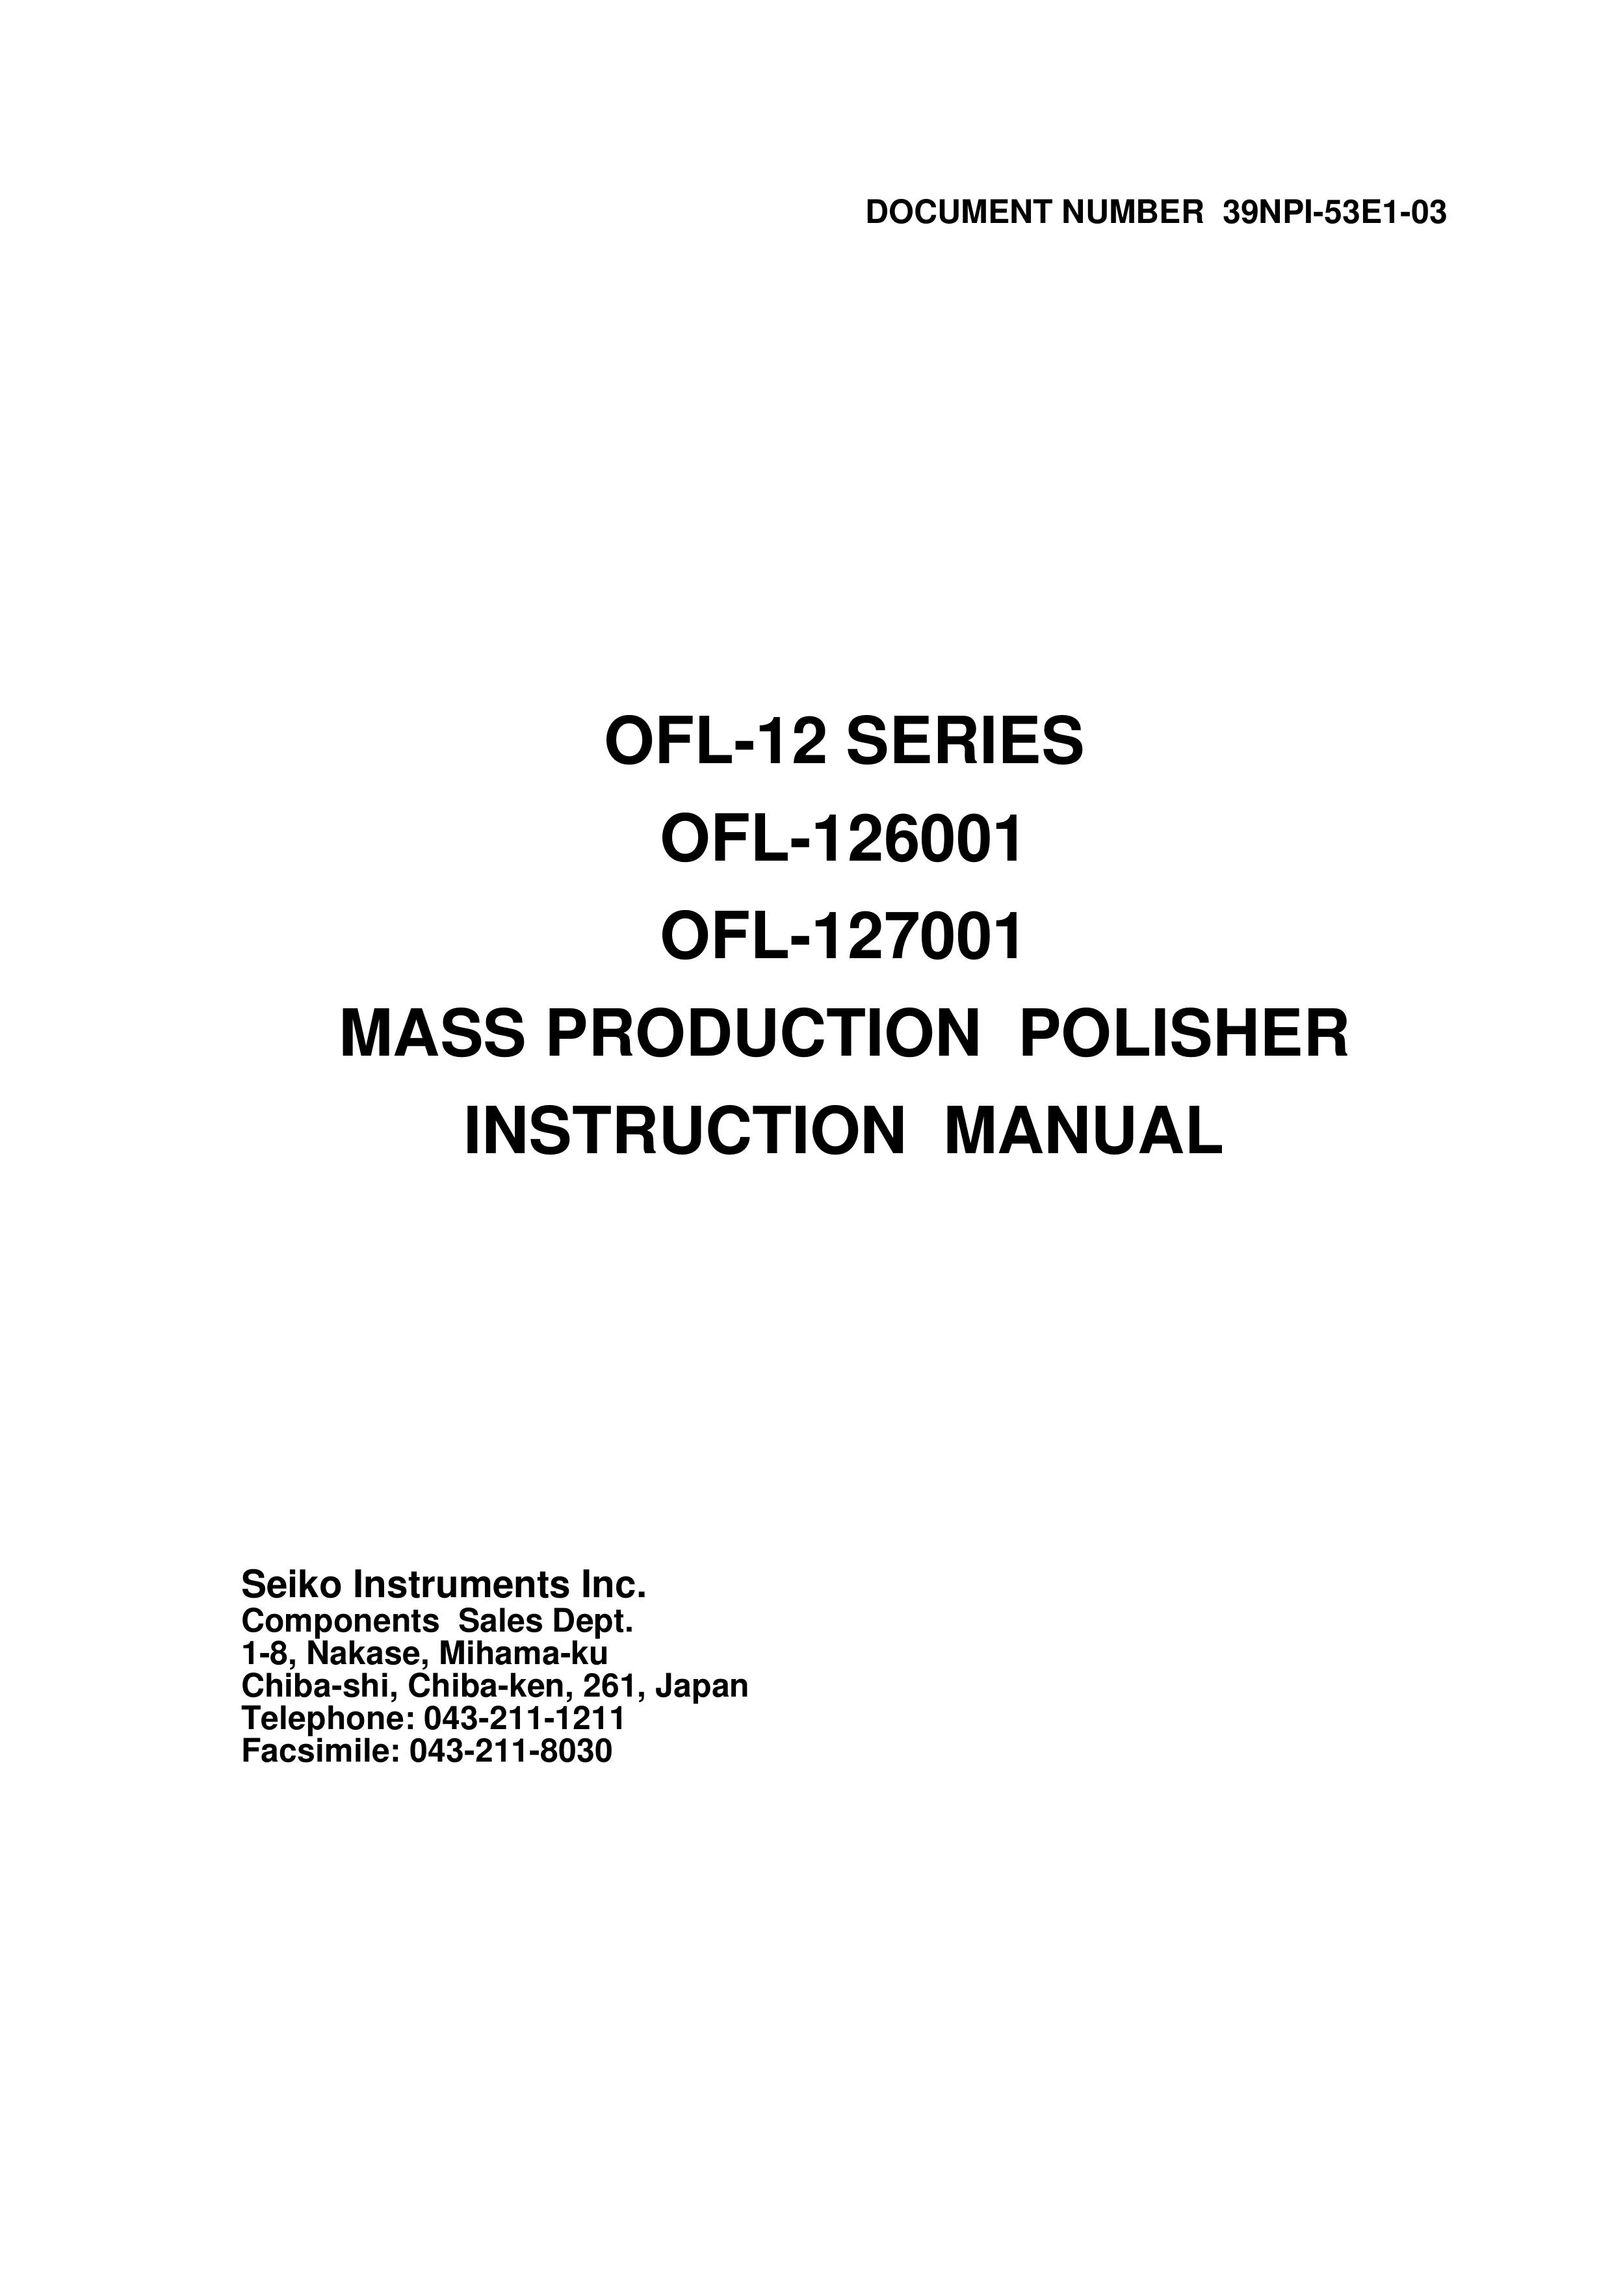 Seiko Group OFL-127001 Sander User Manual